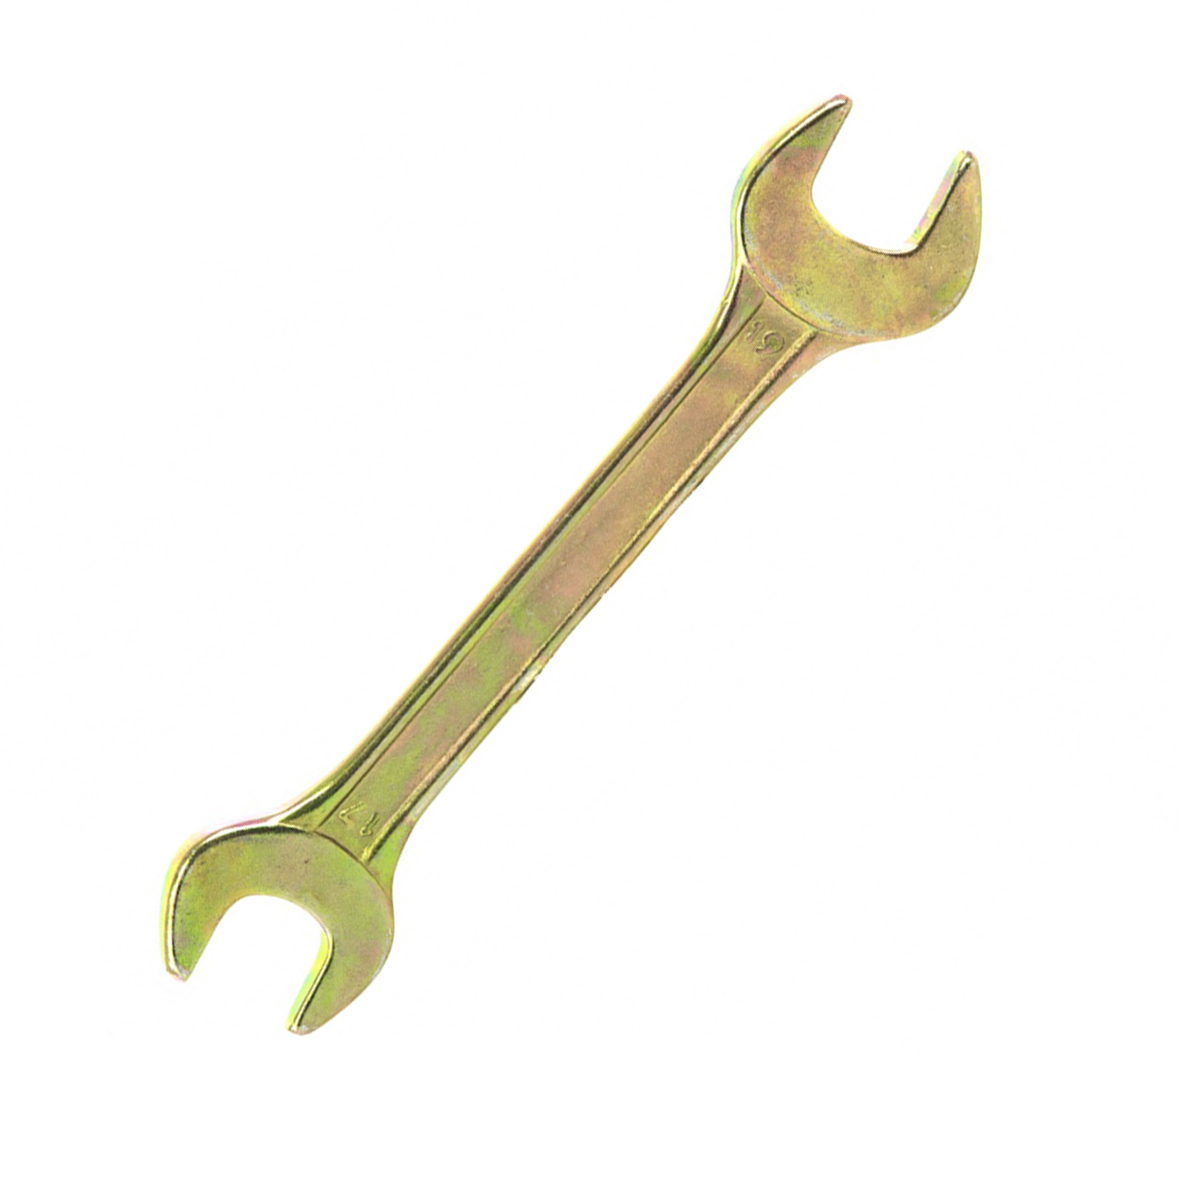 Ключ рожковый 17 х 19 мм, желтый цинк (1/200) "сибртех"